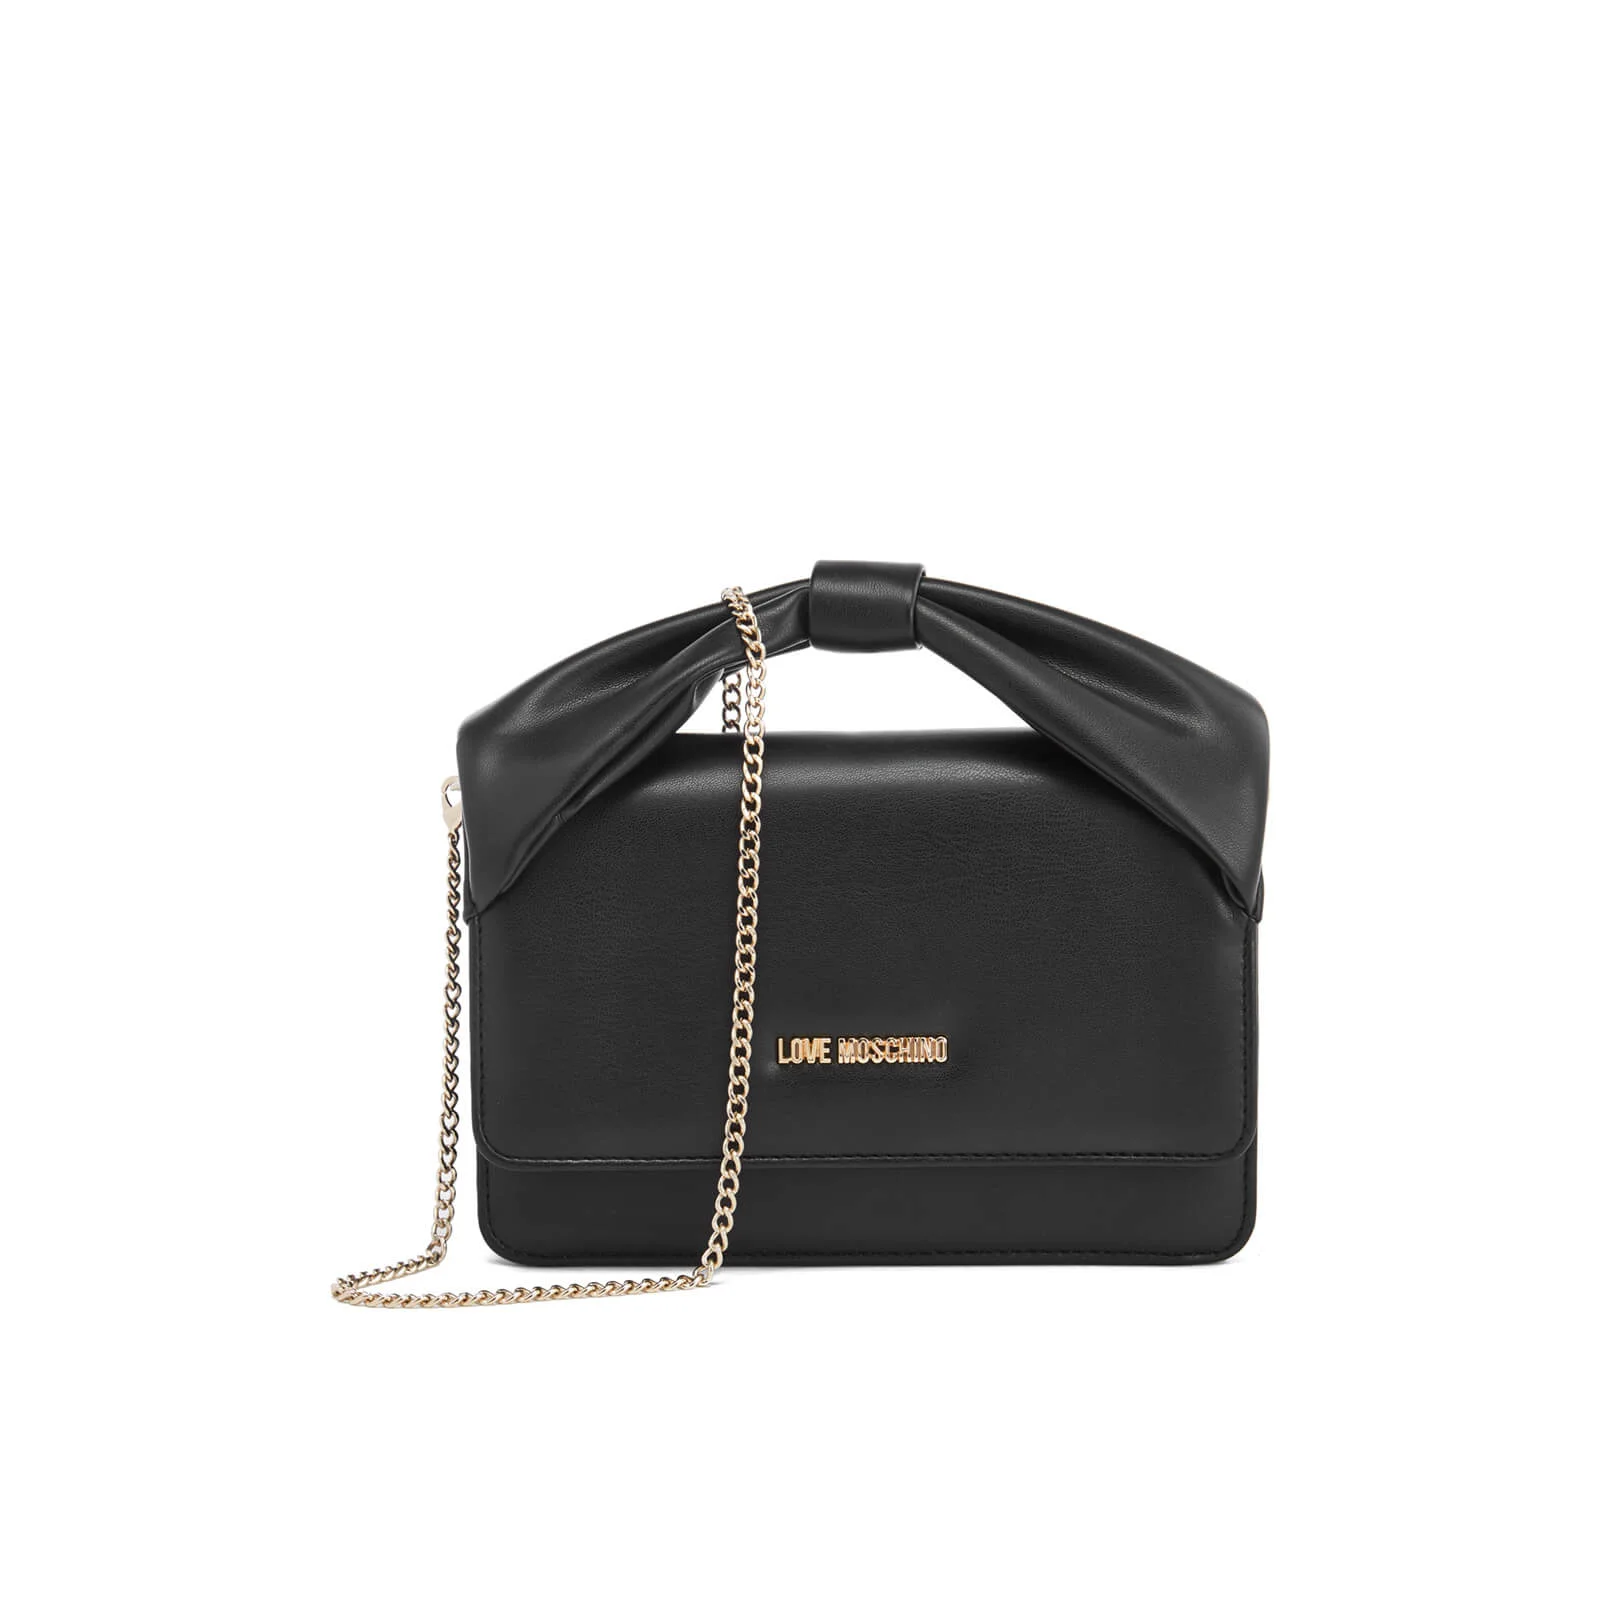 Love Moschino Women's Bow Shoulder Bag - Black Image 1